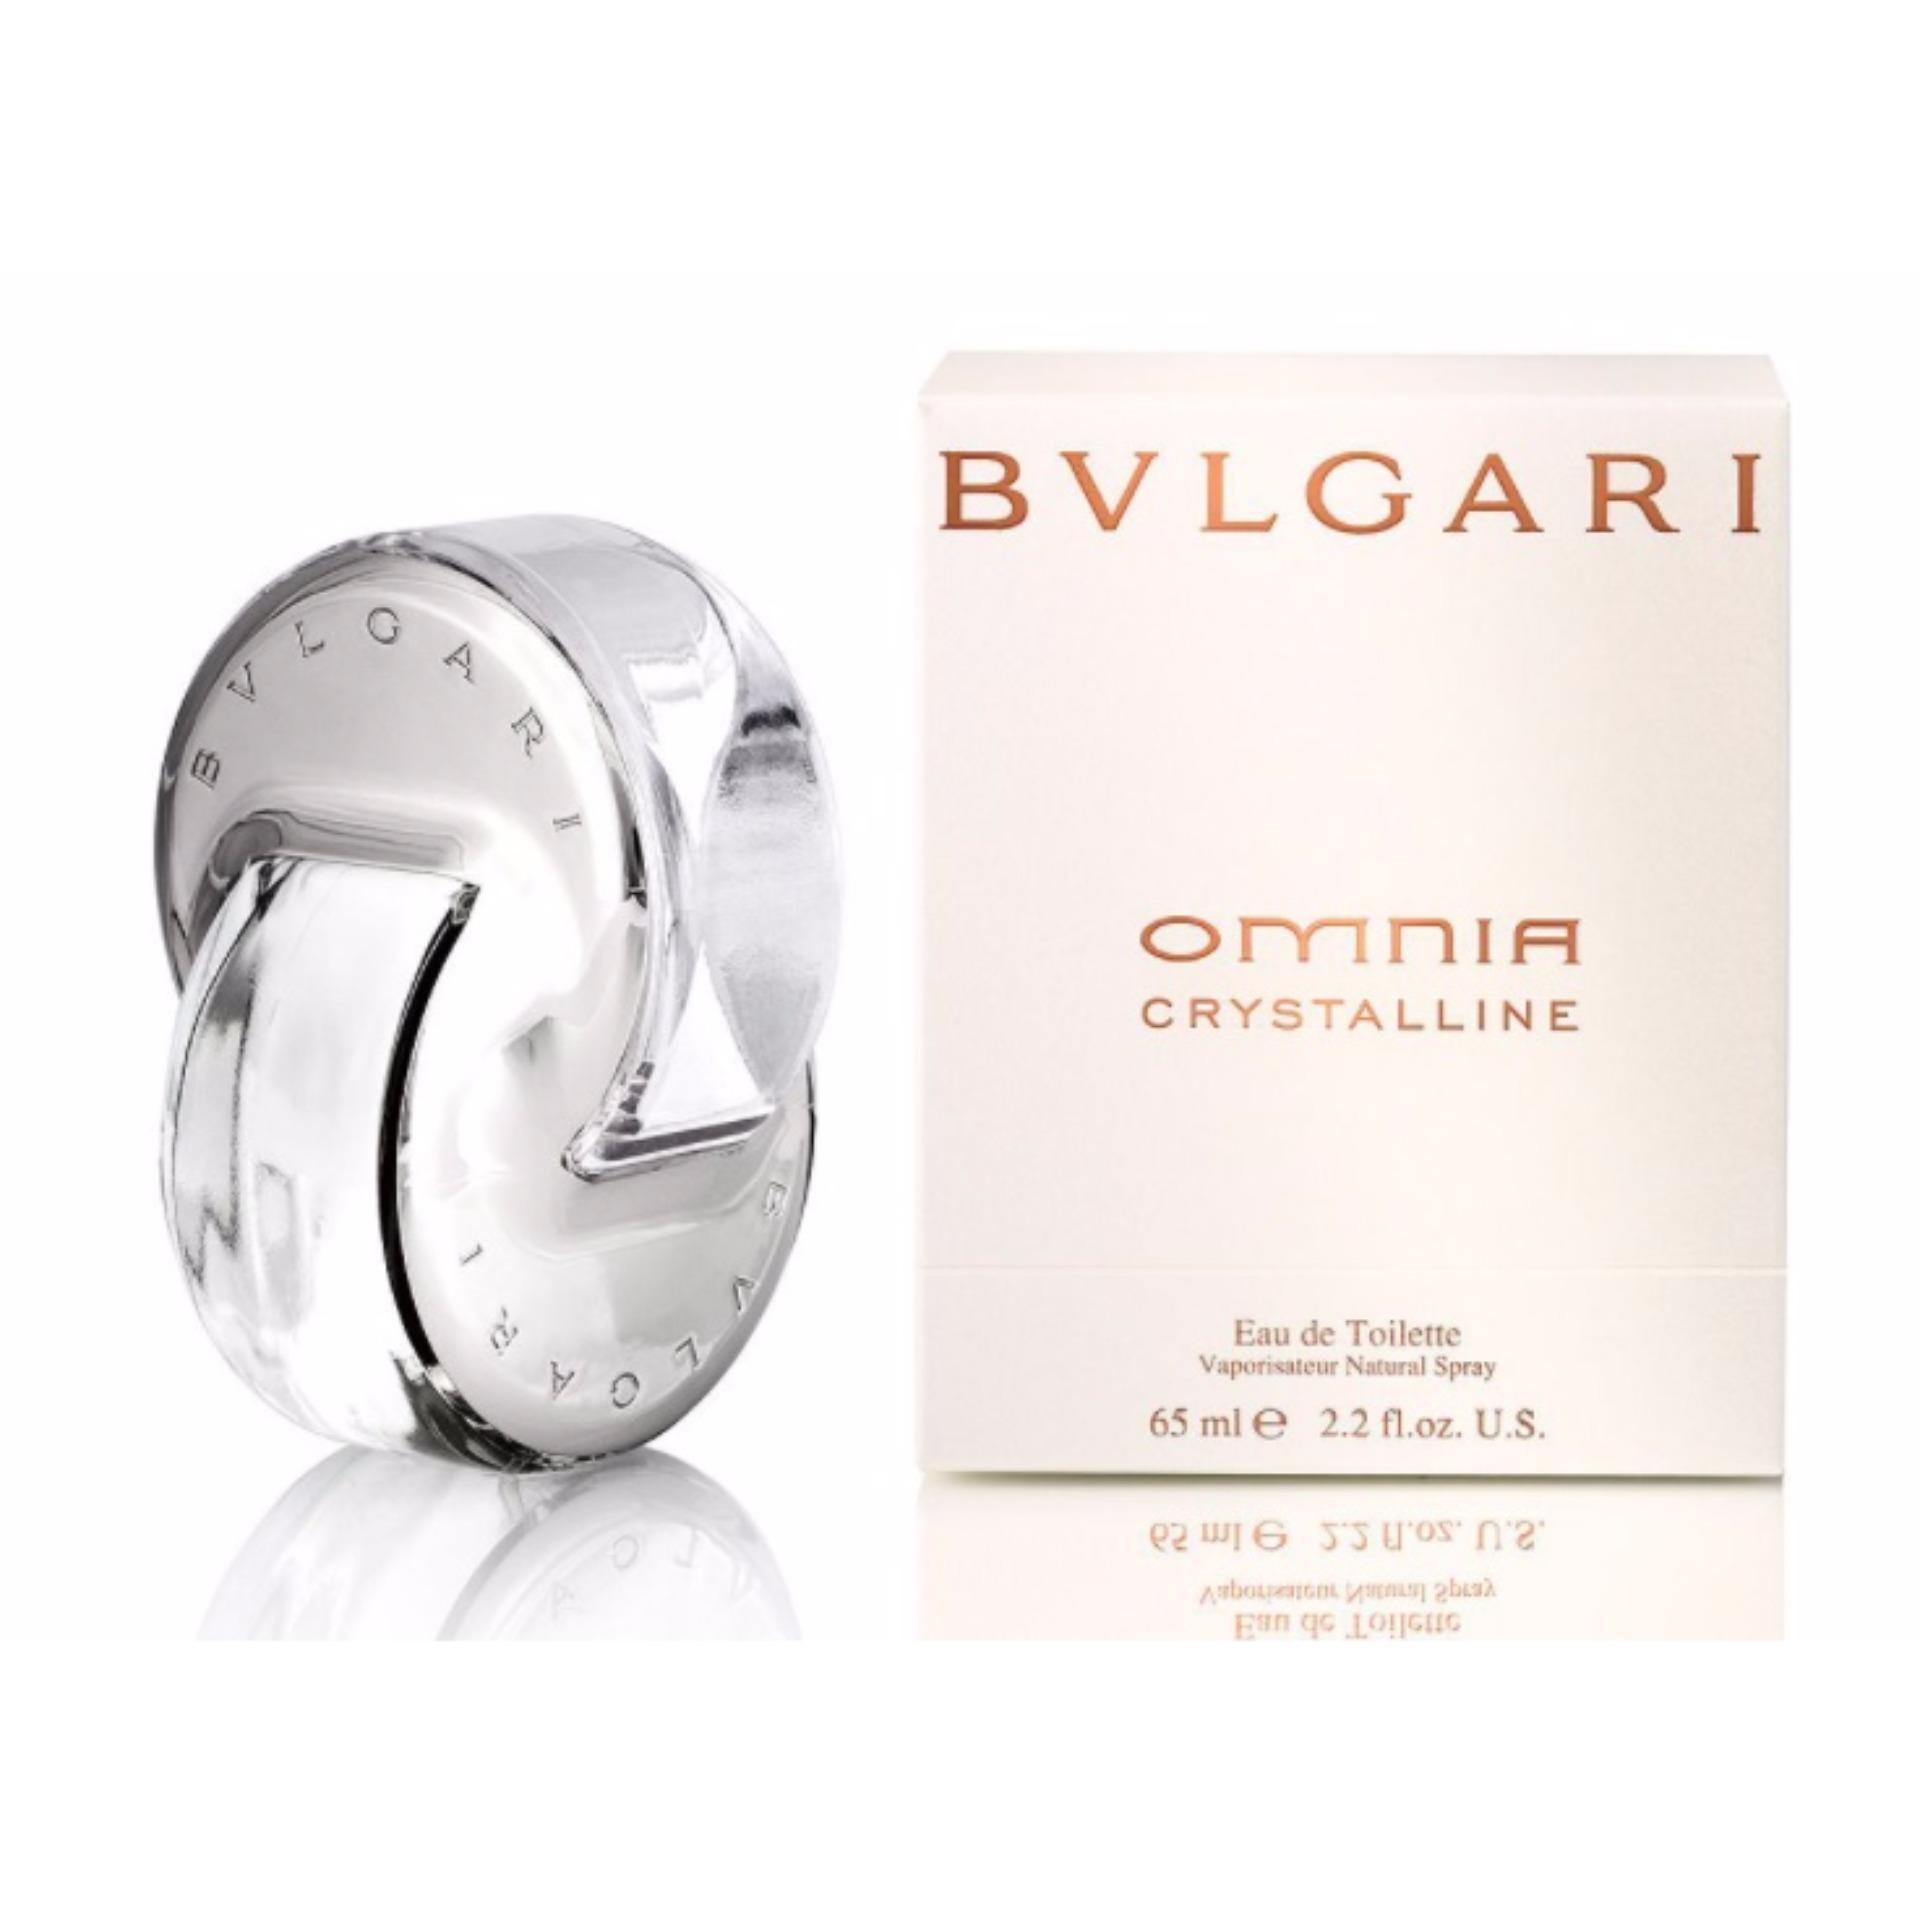 bvlgari omnia crystalline price